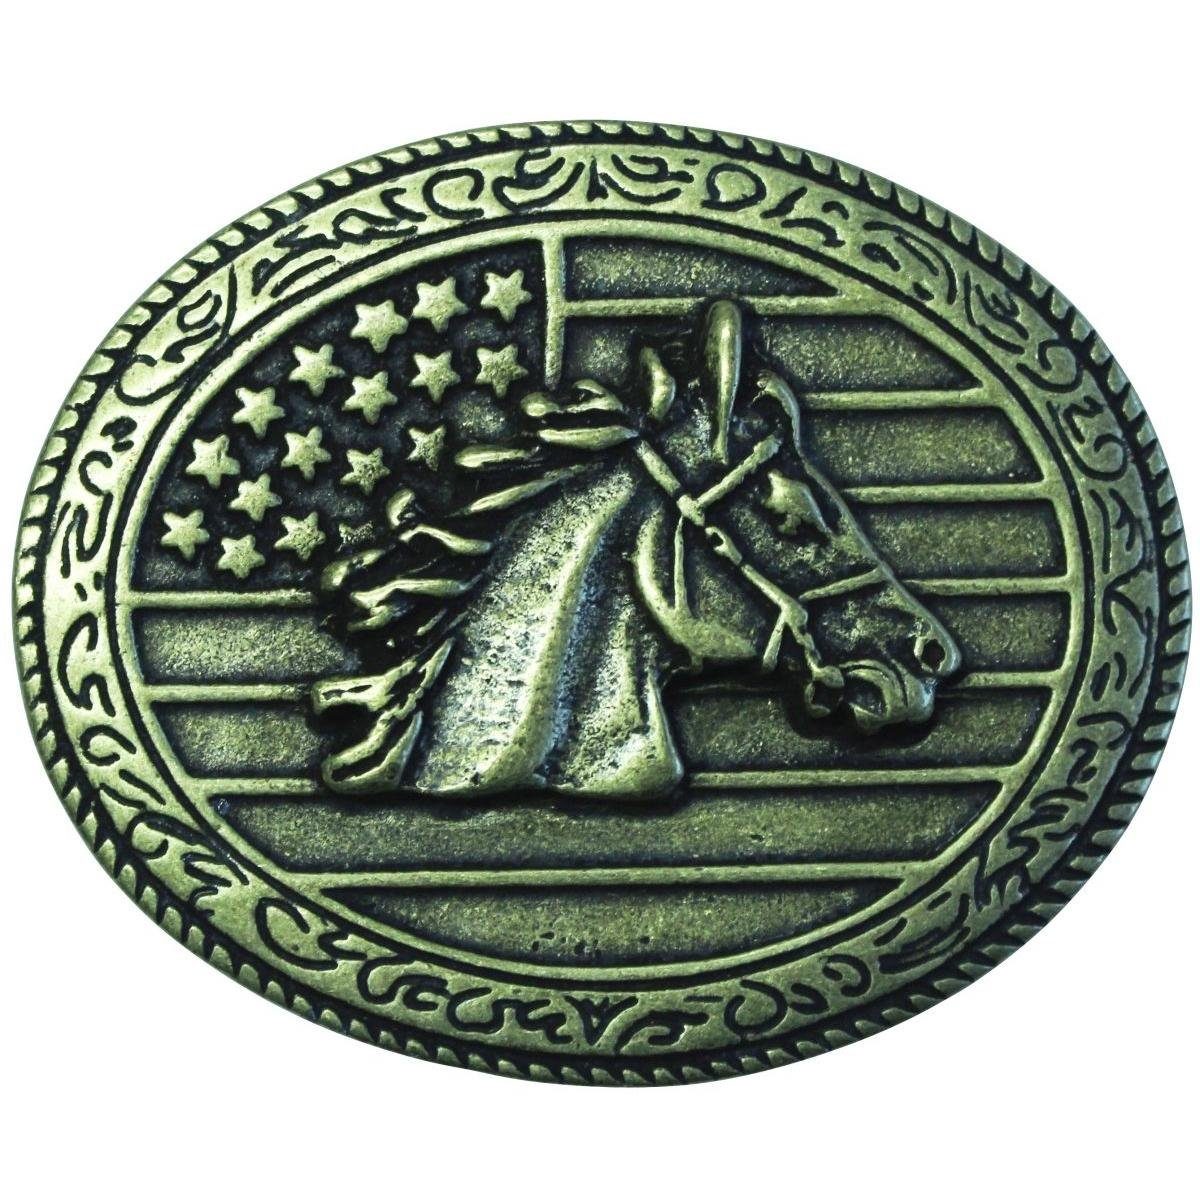 BELTINGER Gürtelschnalle Pferdekopf USA 4,0 cm - Buckle Wechselschließe Gürtelschließe 40mm - f Altmessing